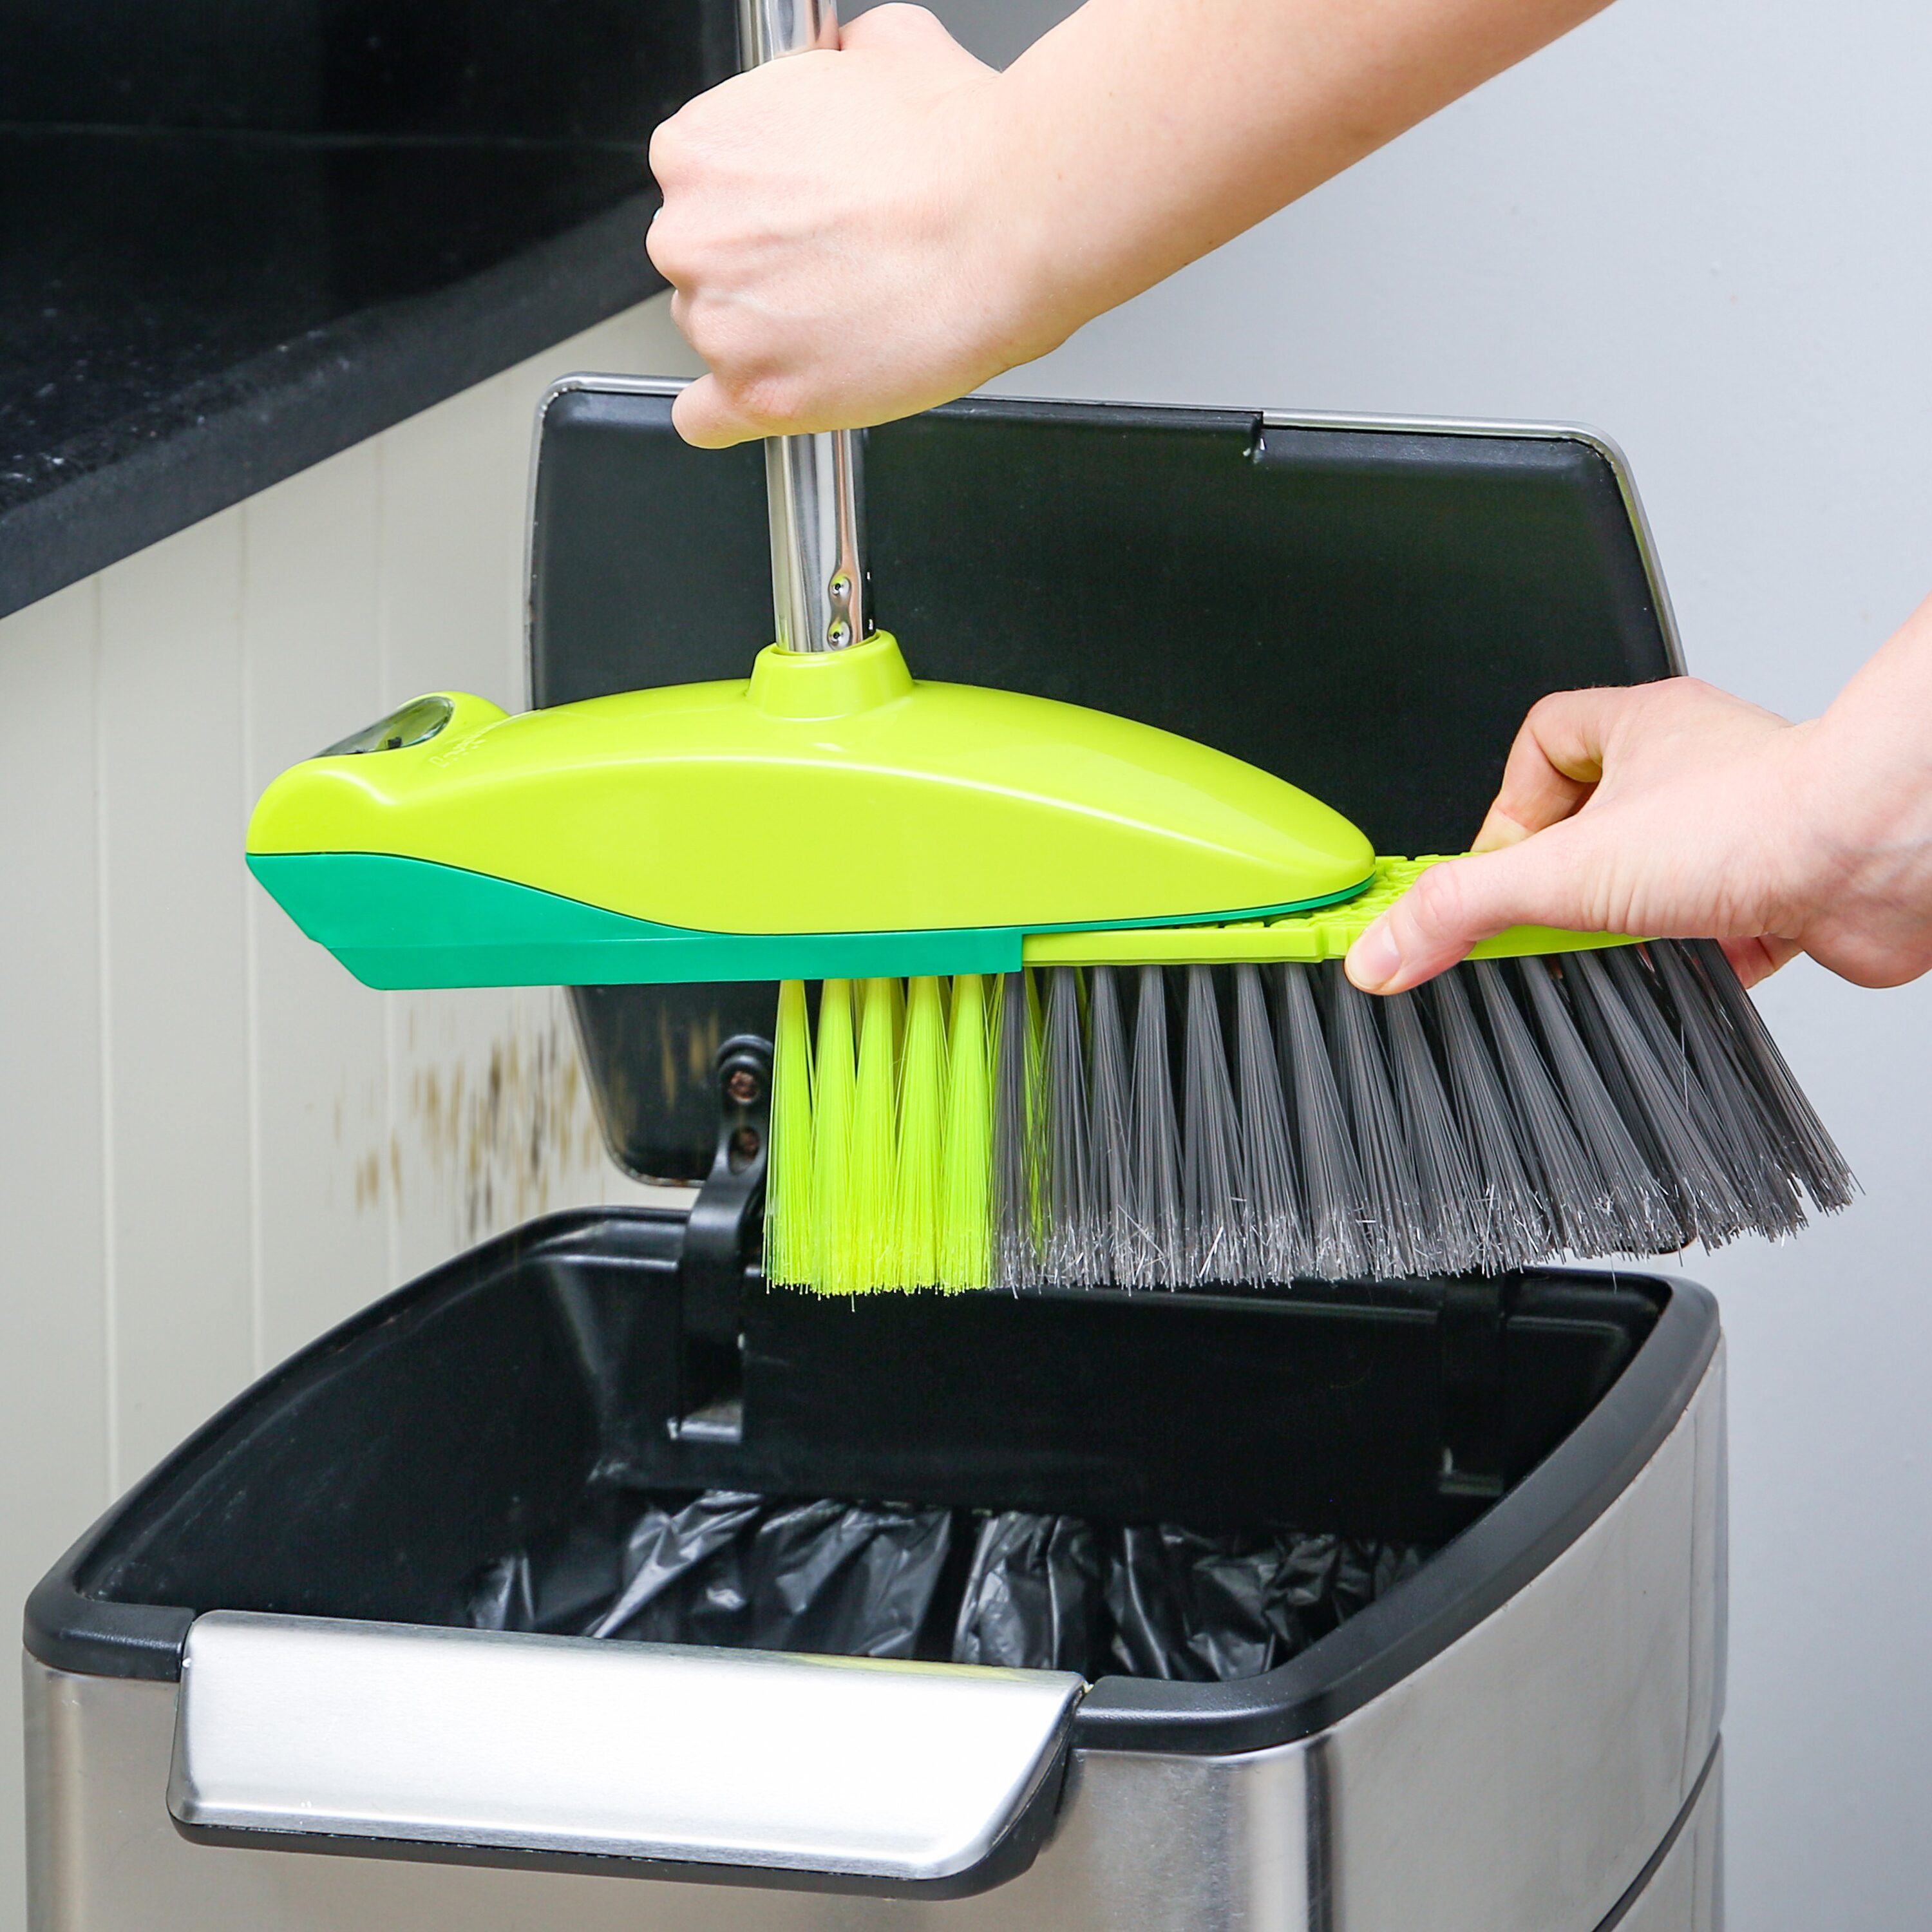 OXO Good Grips Soap Dispensing Dish Sponge Refills, 2-Pack,Yellow,1 EA